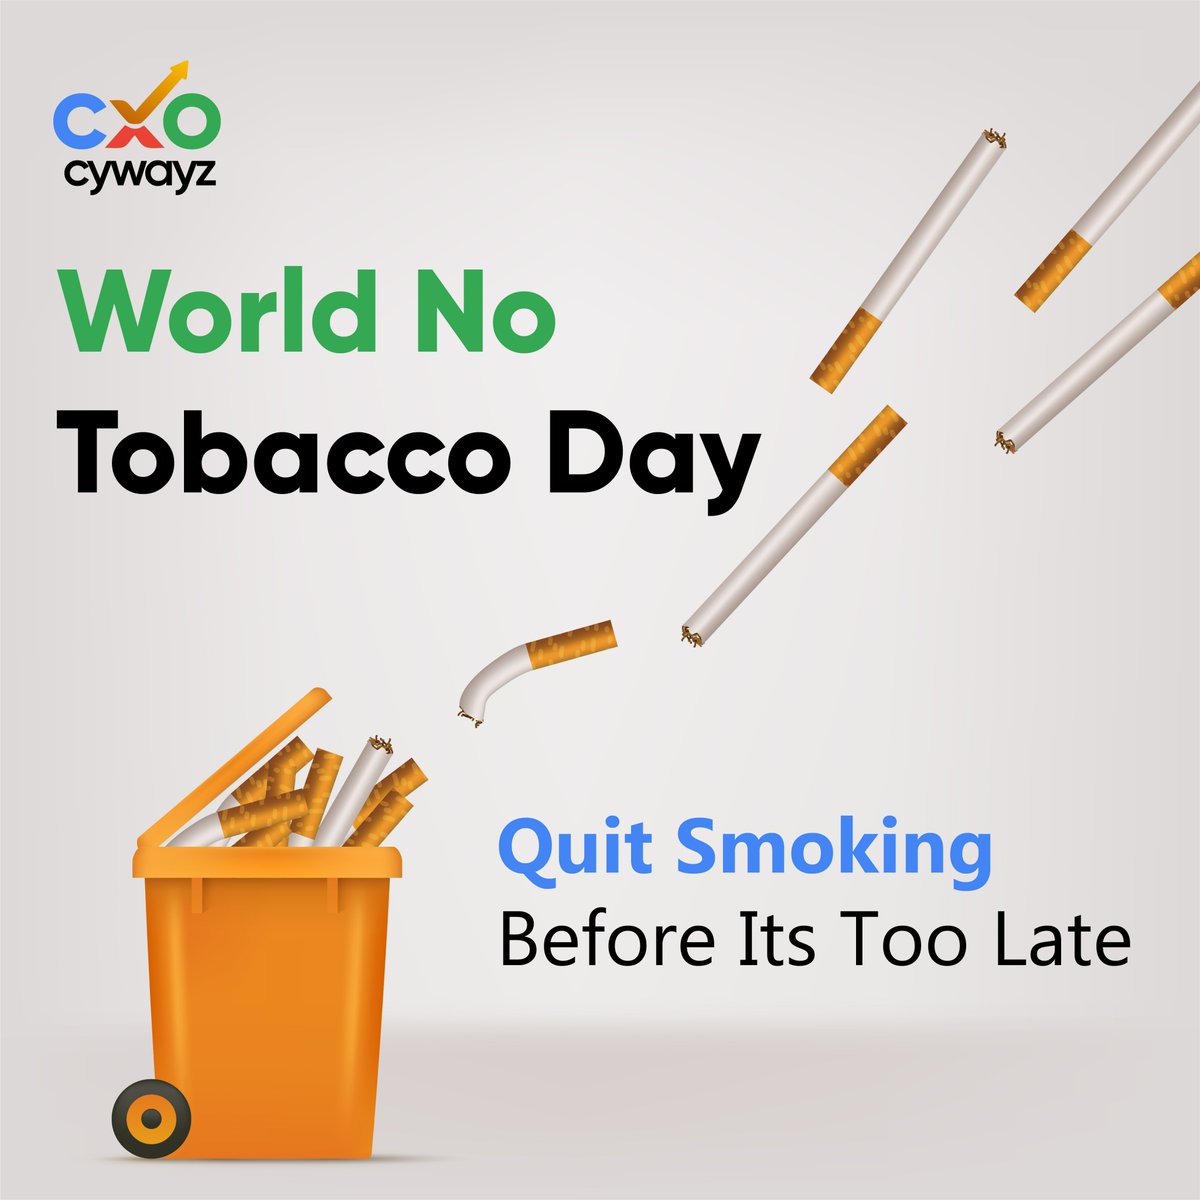 on this World No Tobacco Day, let's commit to promoting healthier, smoke-free lives.

#NoTobaccoDay #TobaccoFreeWorkplace #HealthyWorkforce #CXOsAgainstTobacco #CorporateWellness #SmokeFreeBusiness #LeadershipForHealth #WellnessAtWork #BreatheEasyAtWork #HealthierFuture#cxocywayz